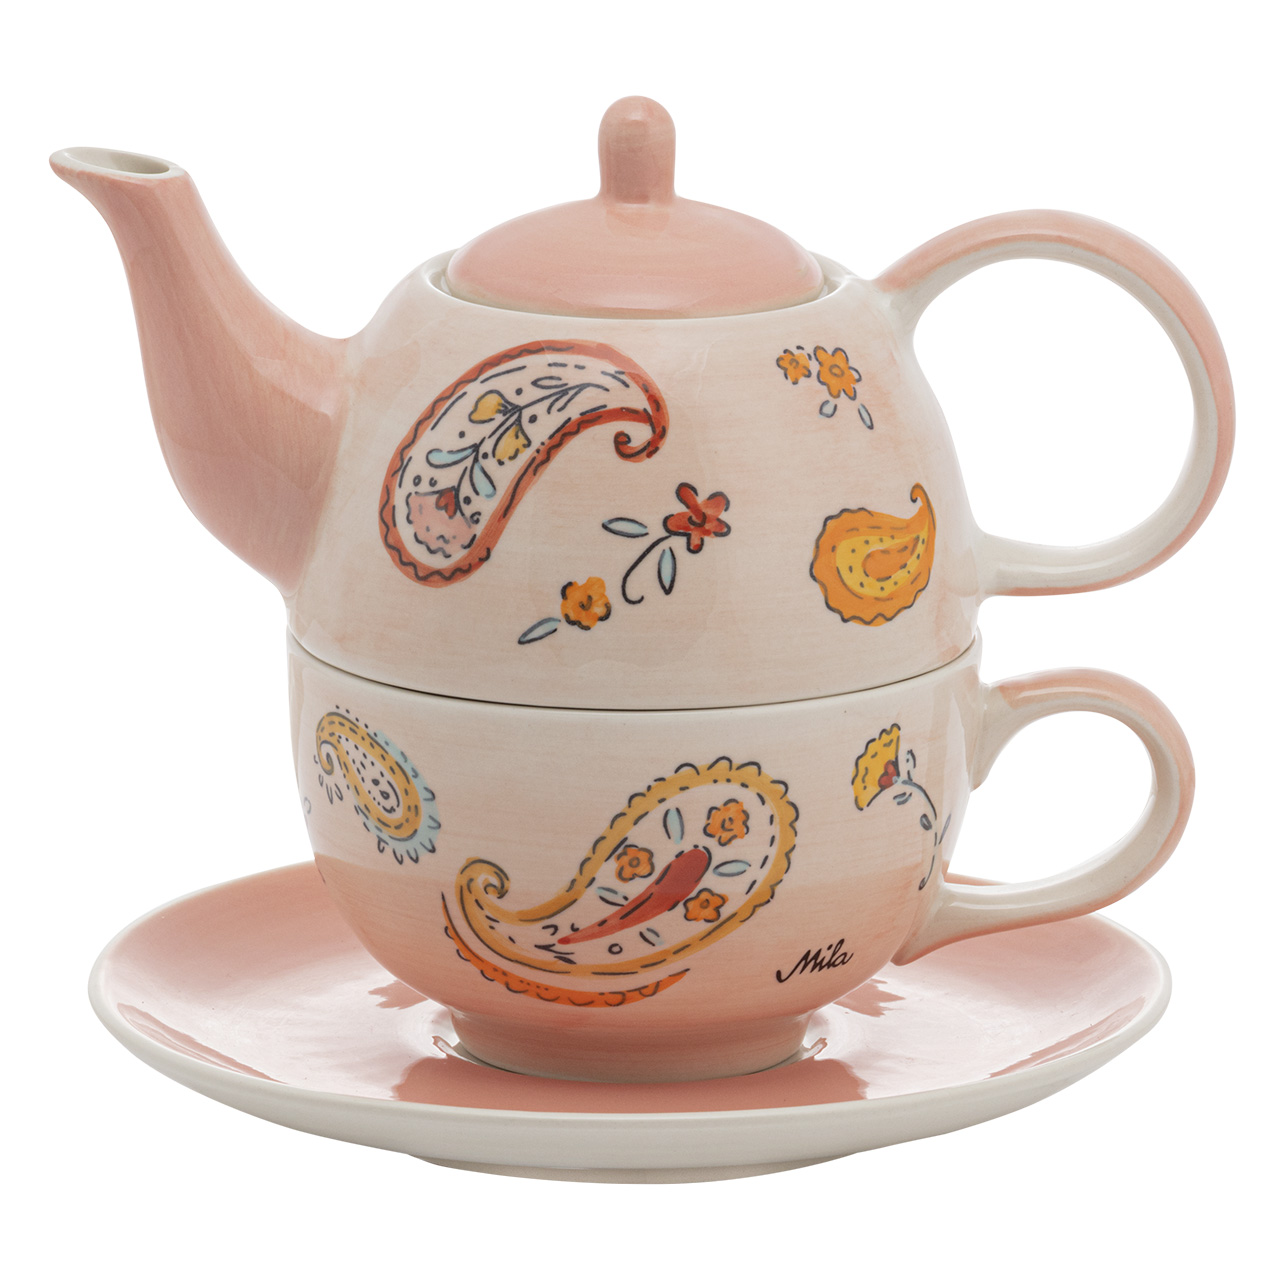 Tea for one - Pretty Paisley